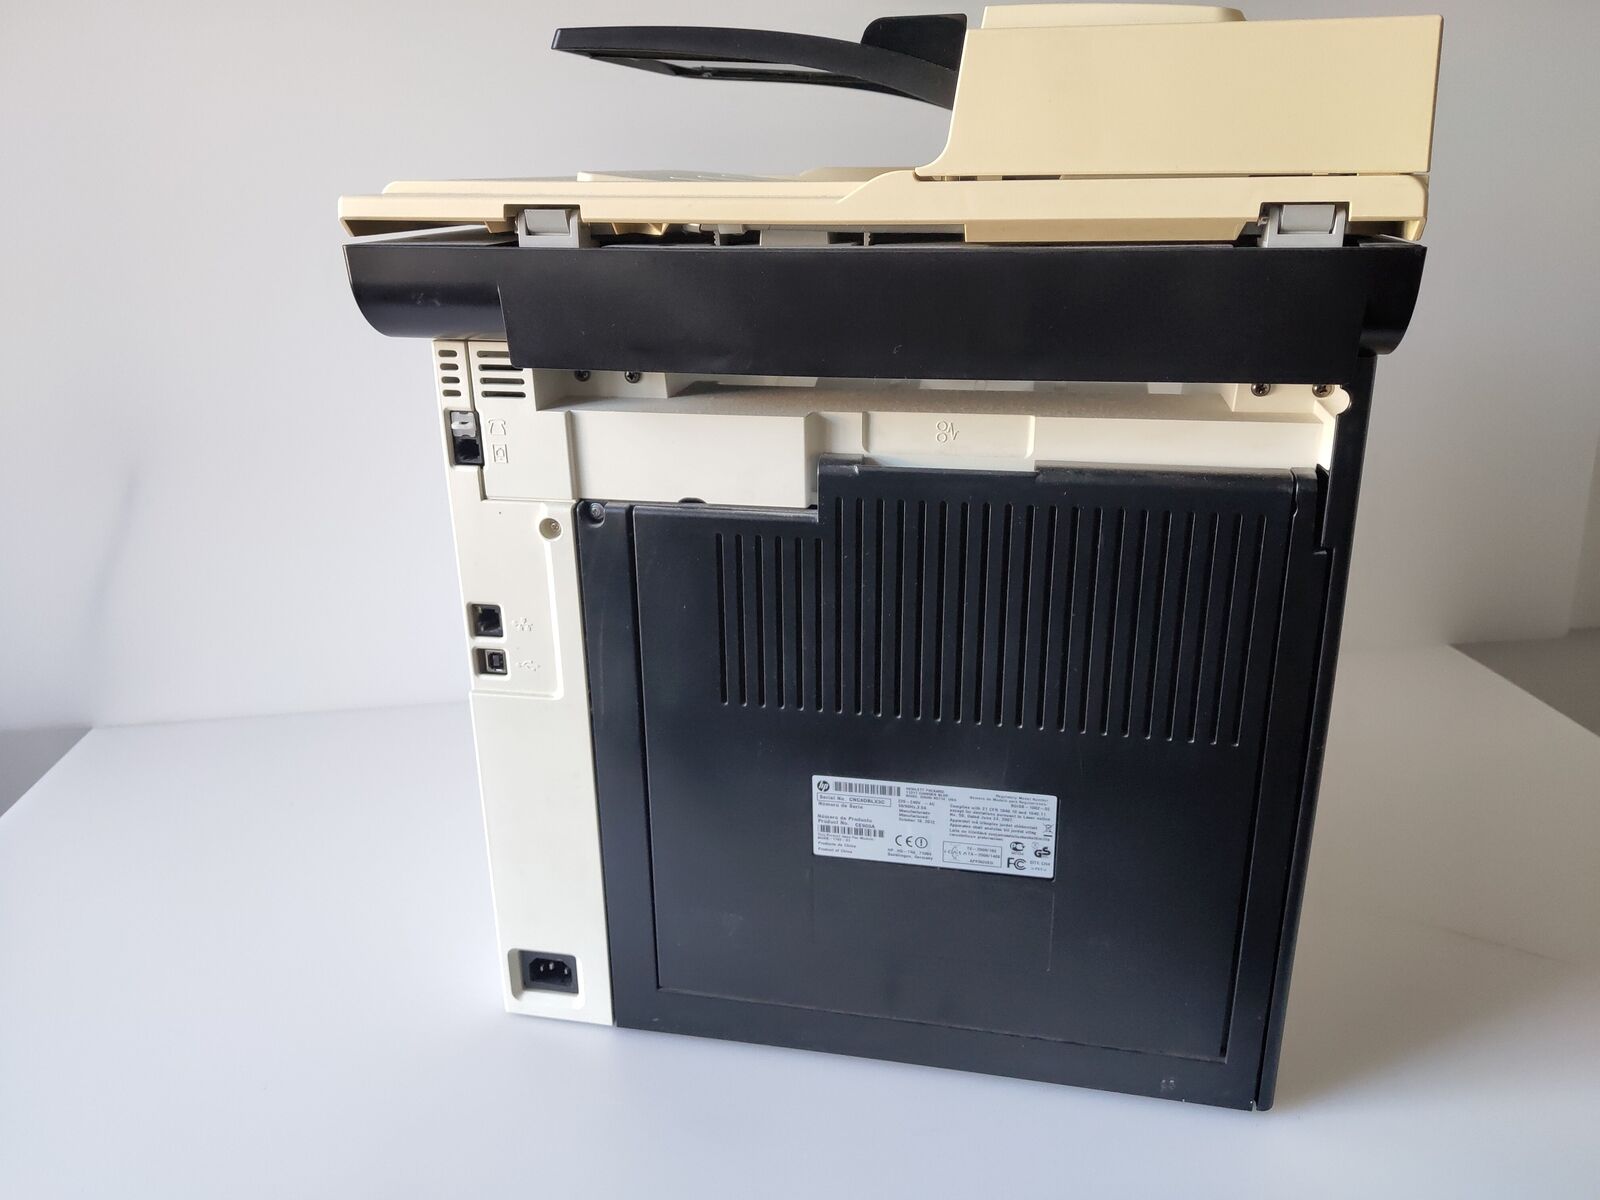 CE903A HP Laserjet Pro 300 Color MFP M375Nw Printer